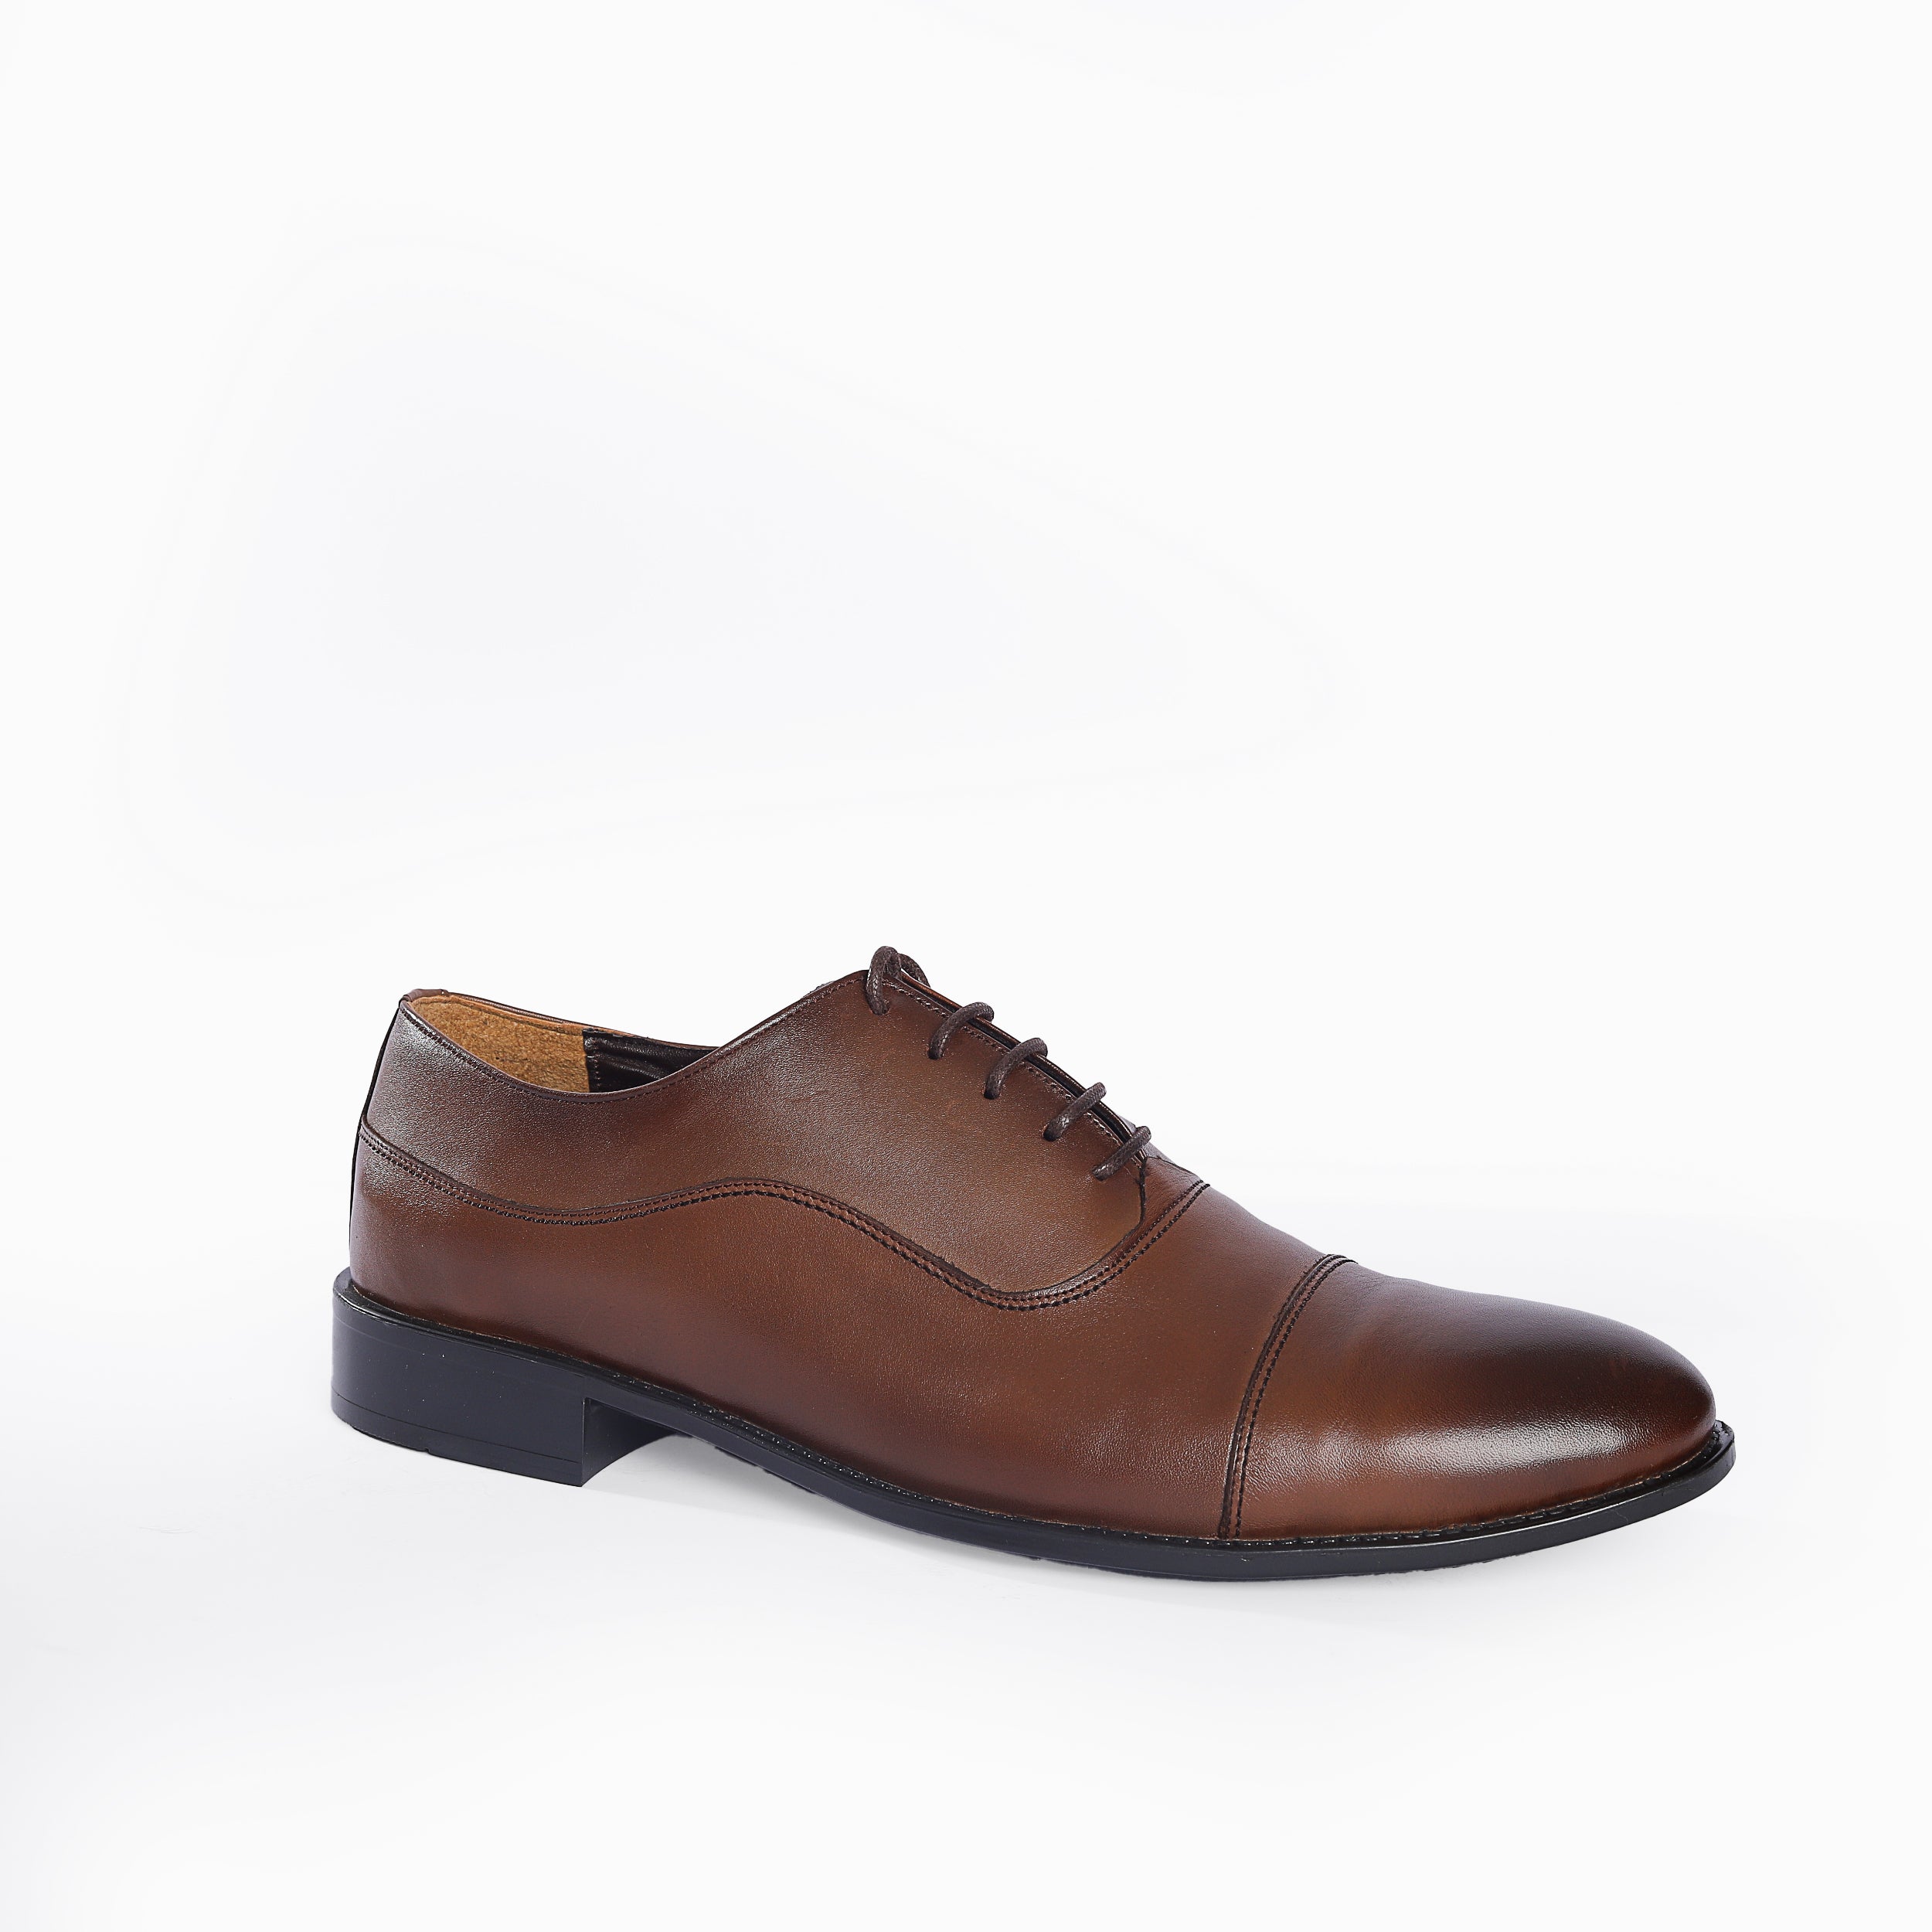 Cavallo Classic Shoes 501